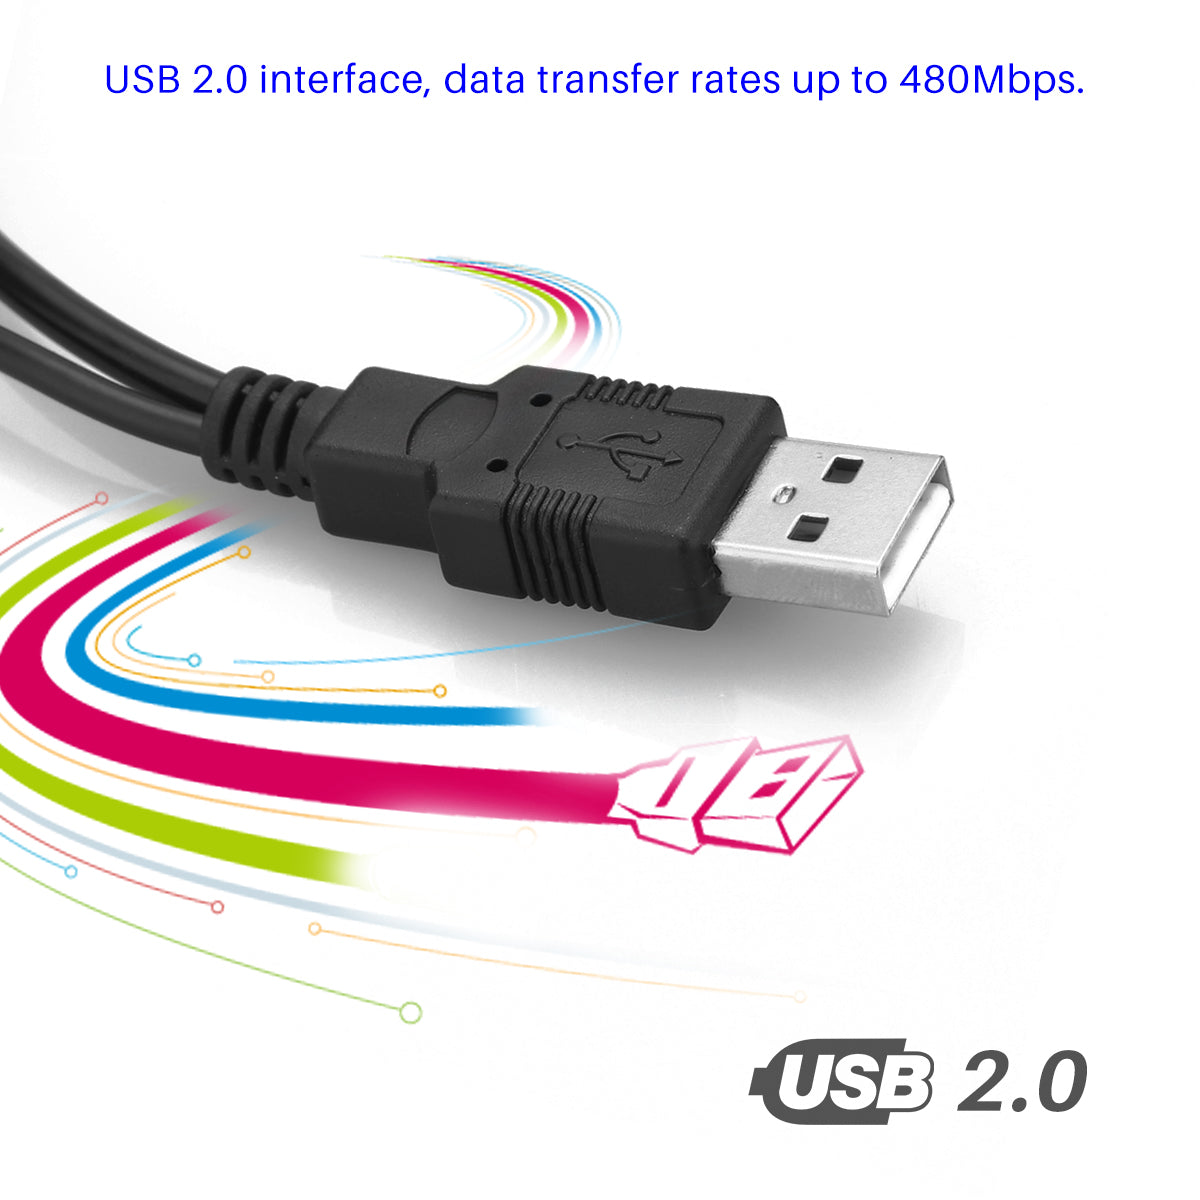 USB 3.0 SATA 15 + 7 Pin to USB 2.0 Adapter Cable